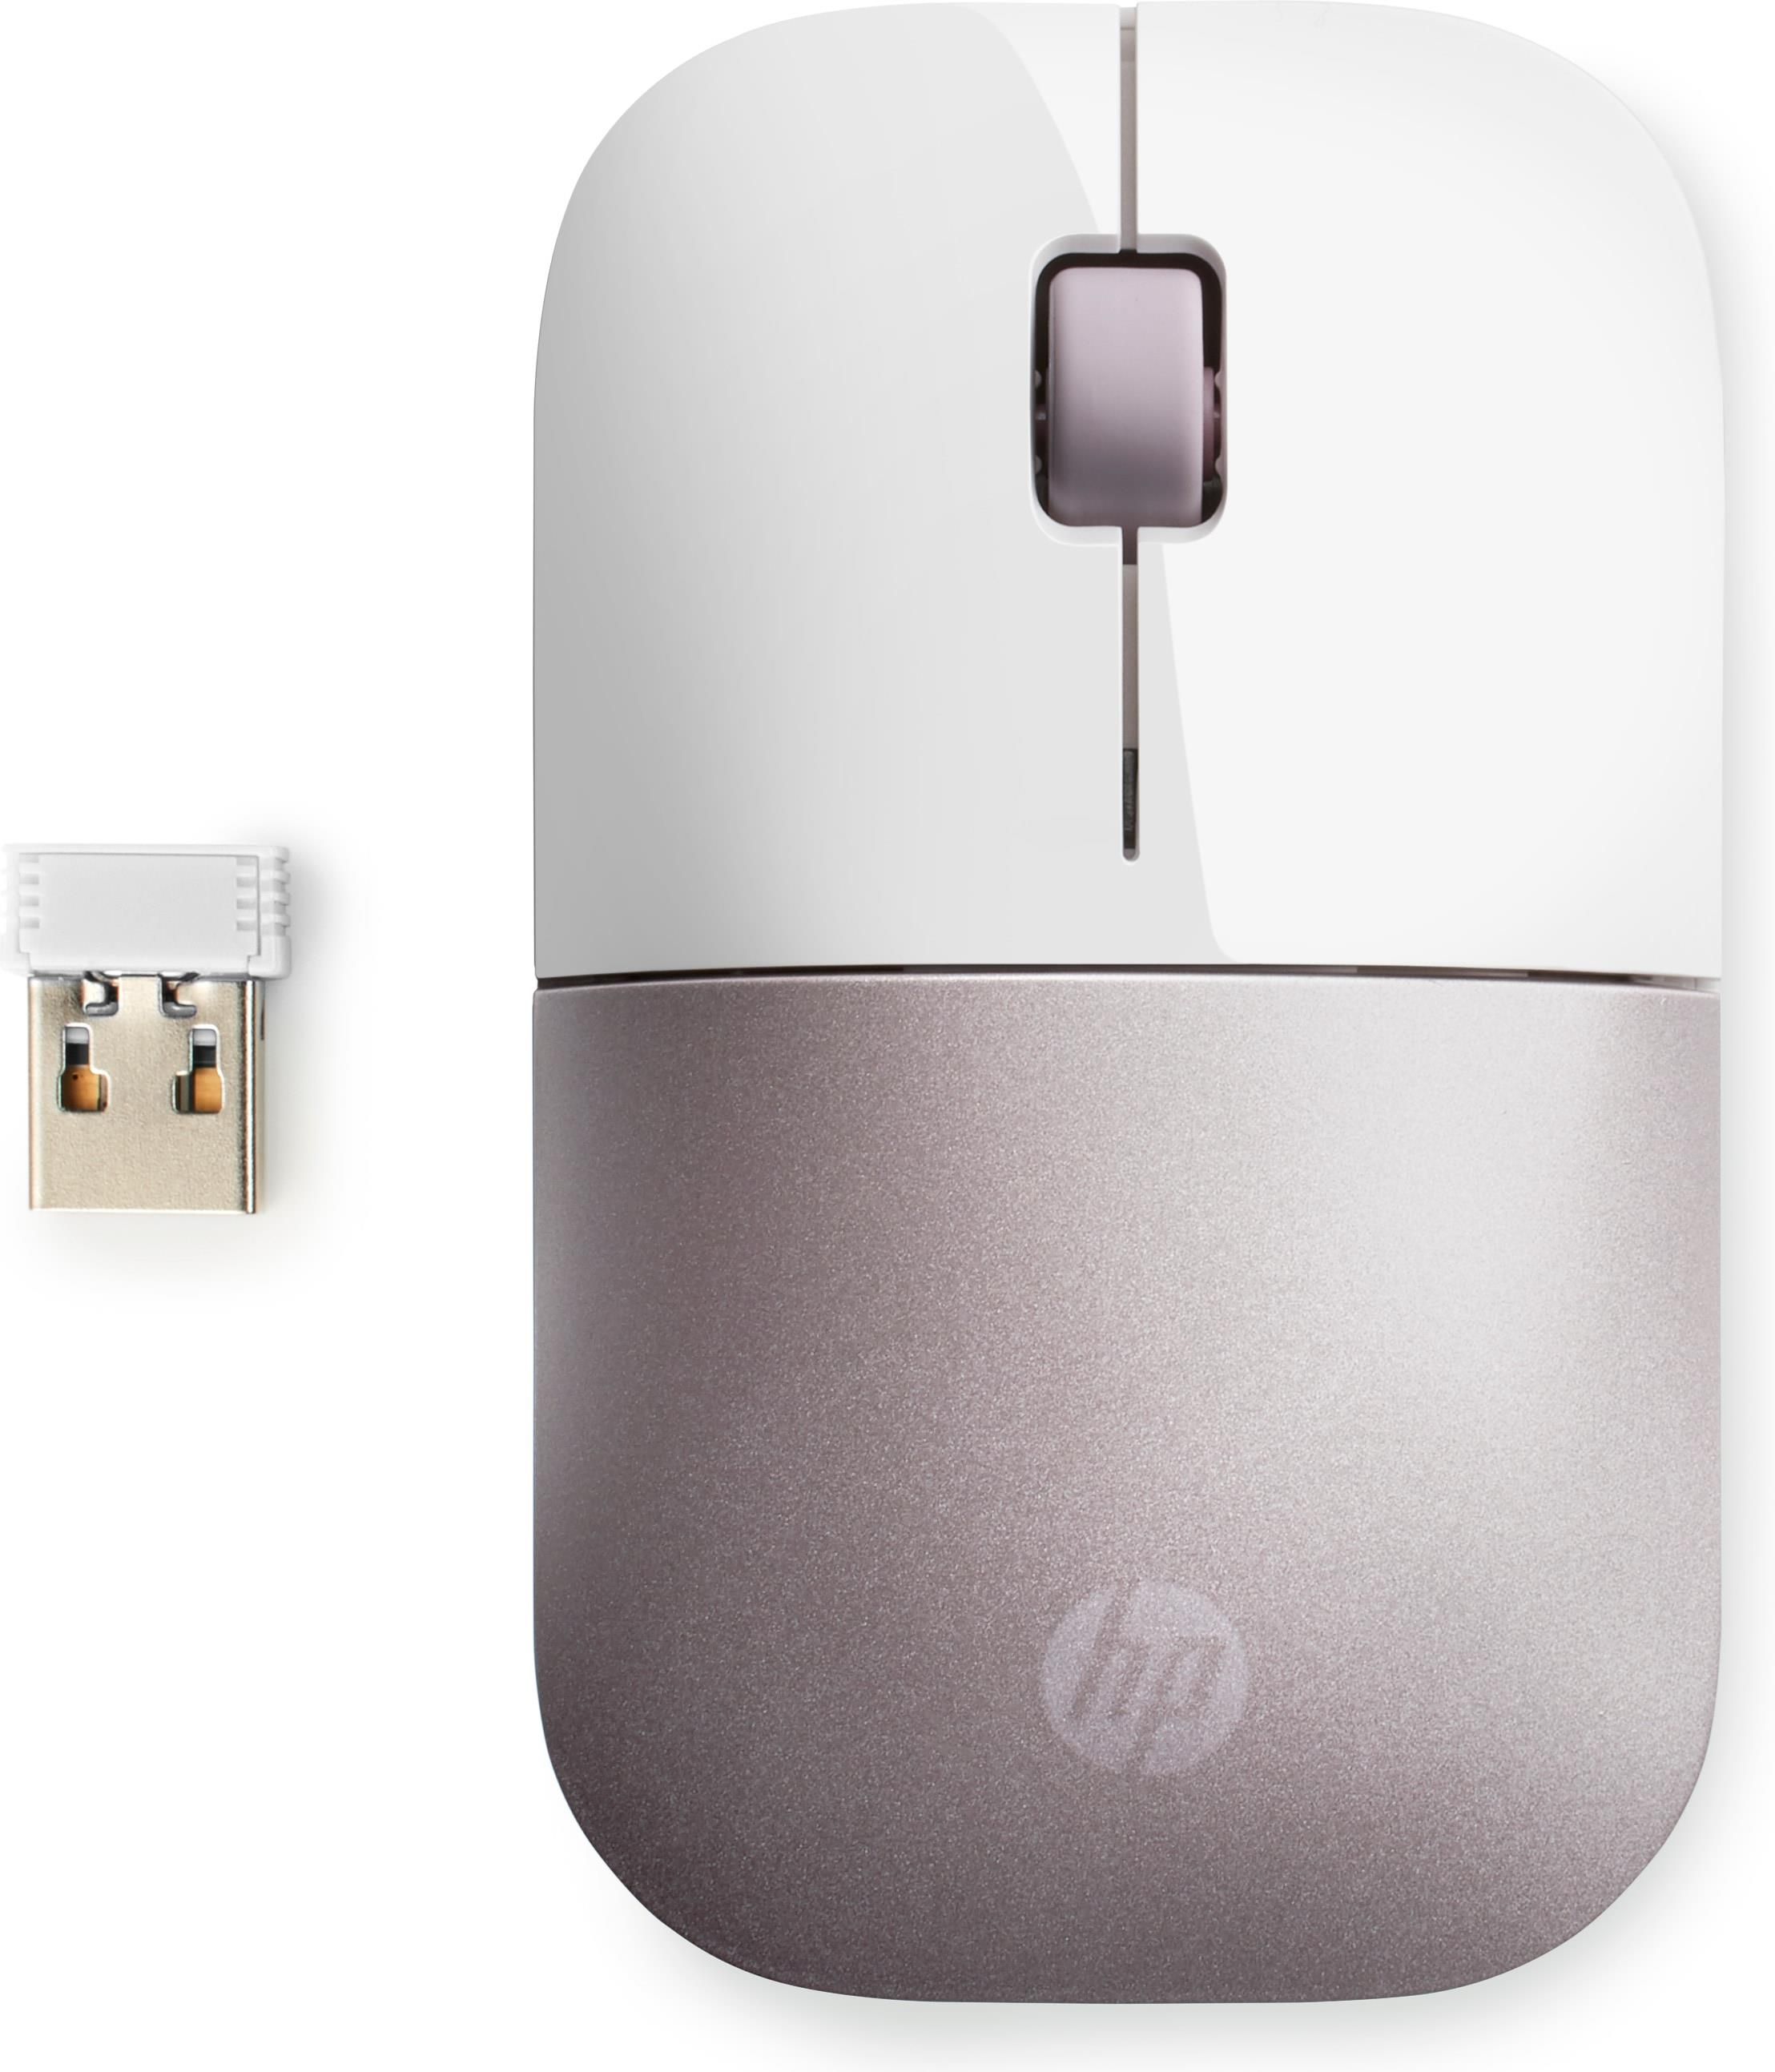 HP Z3700 Mouse RF